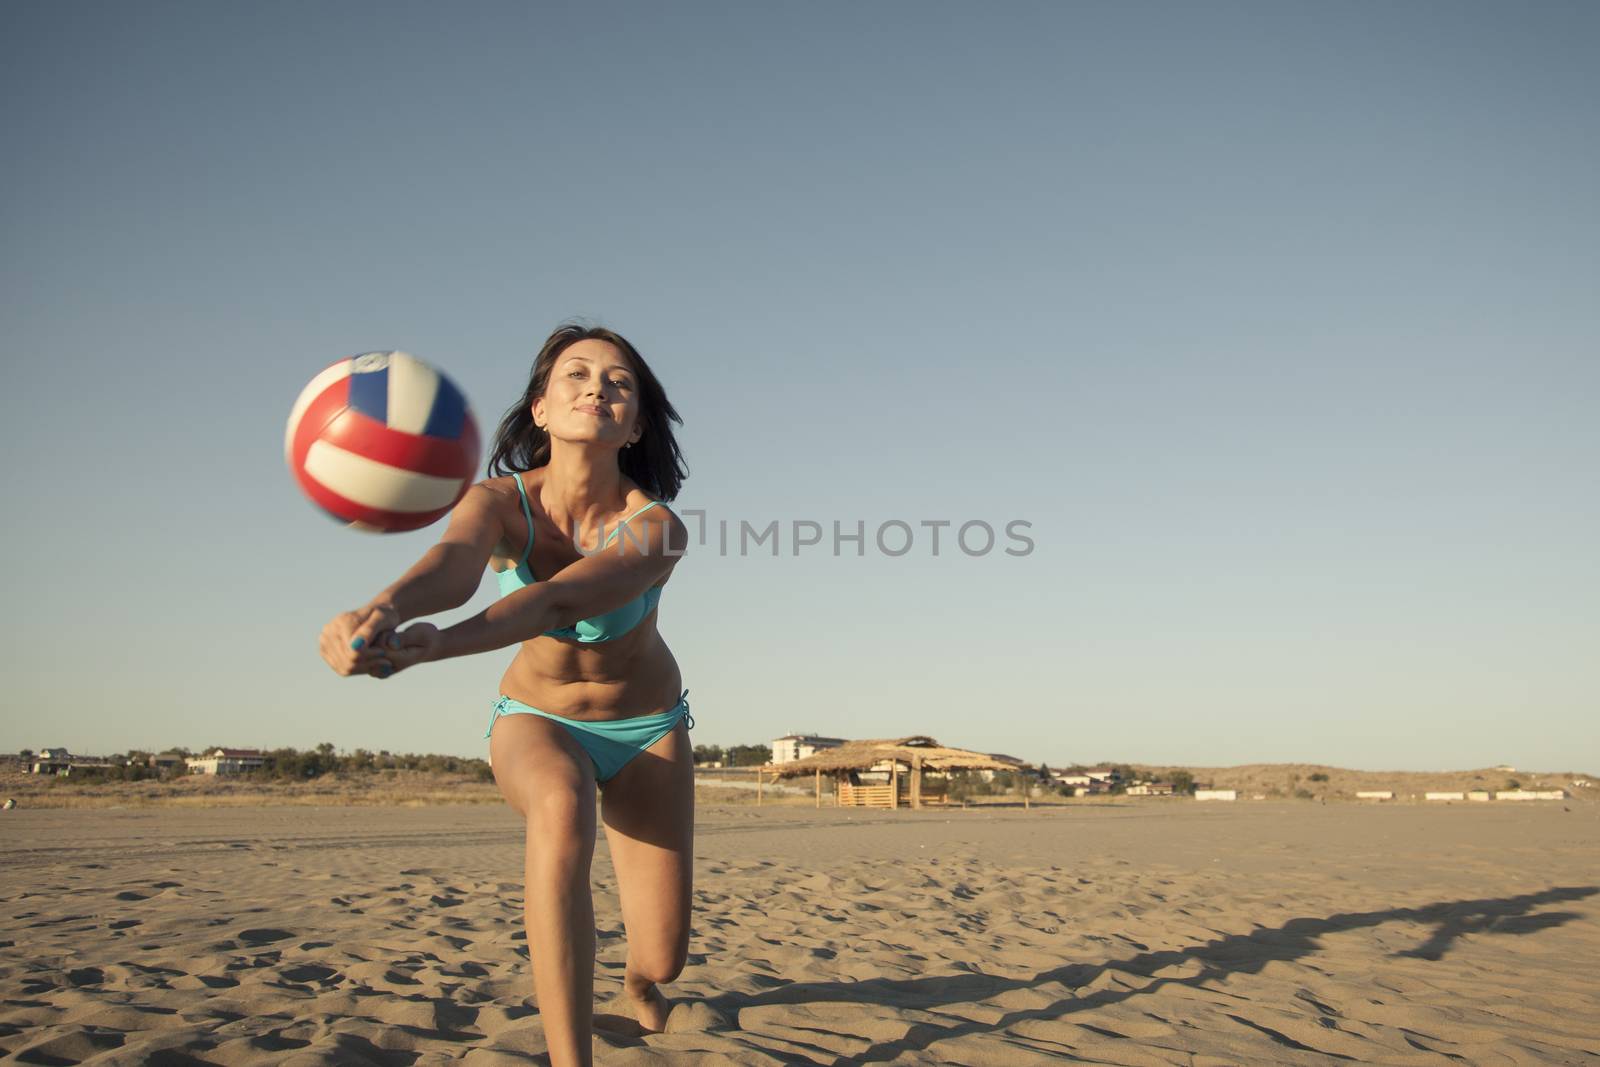 Beach voleyball by snep_photo